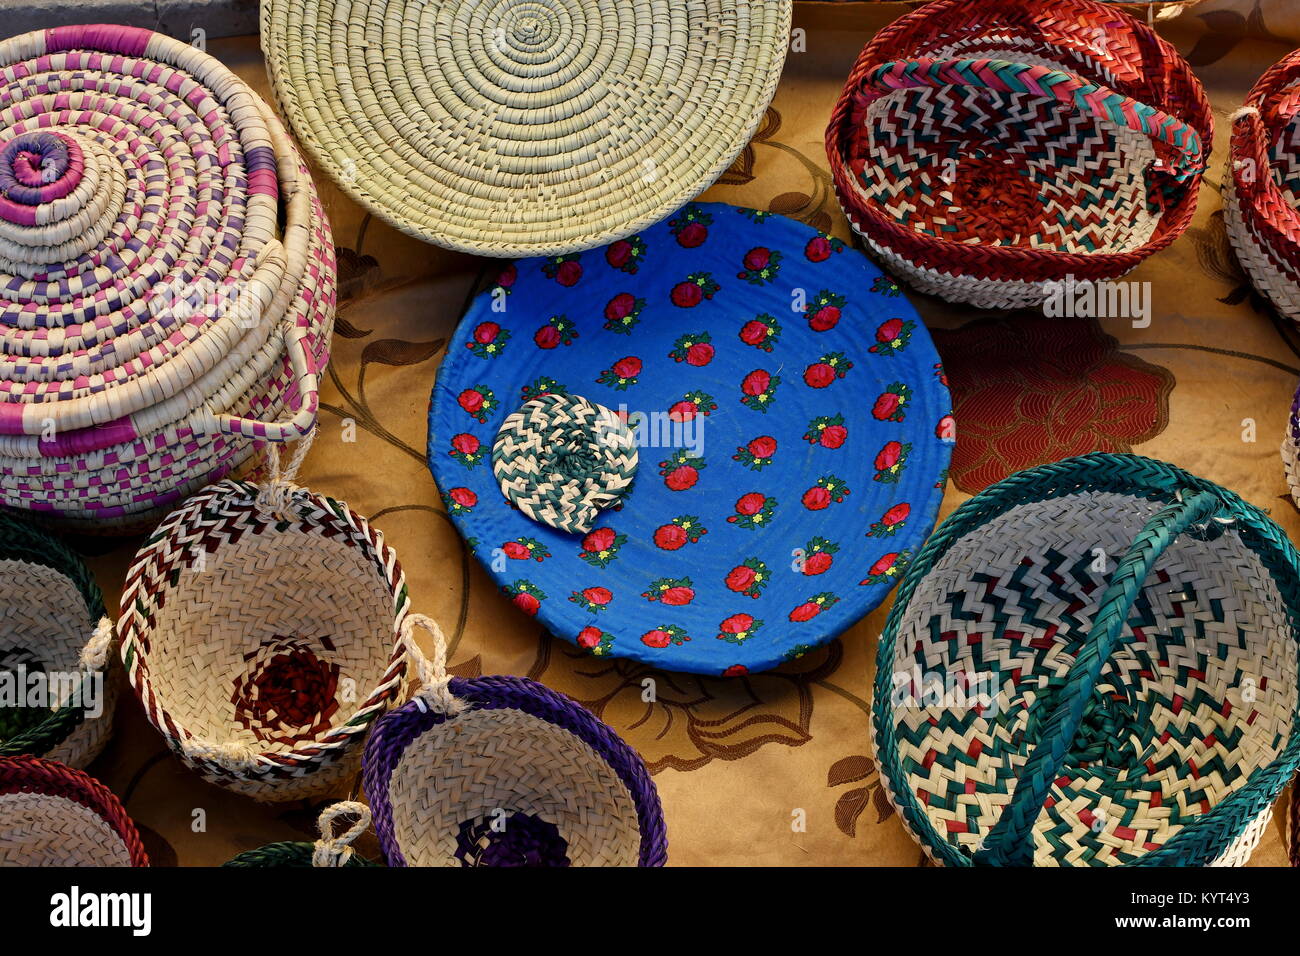 Saudi Arabia Arts and Crafts Handmade Stock Photo